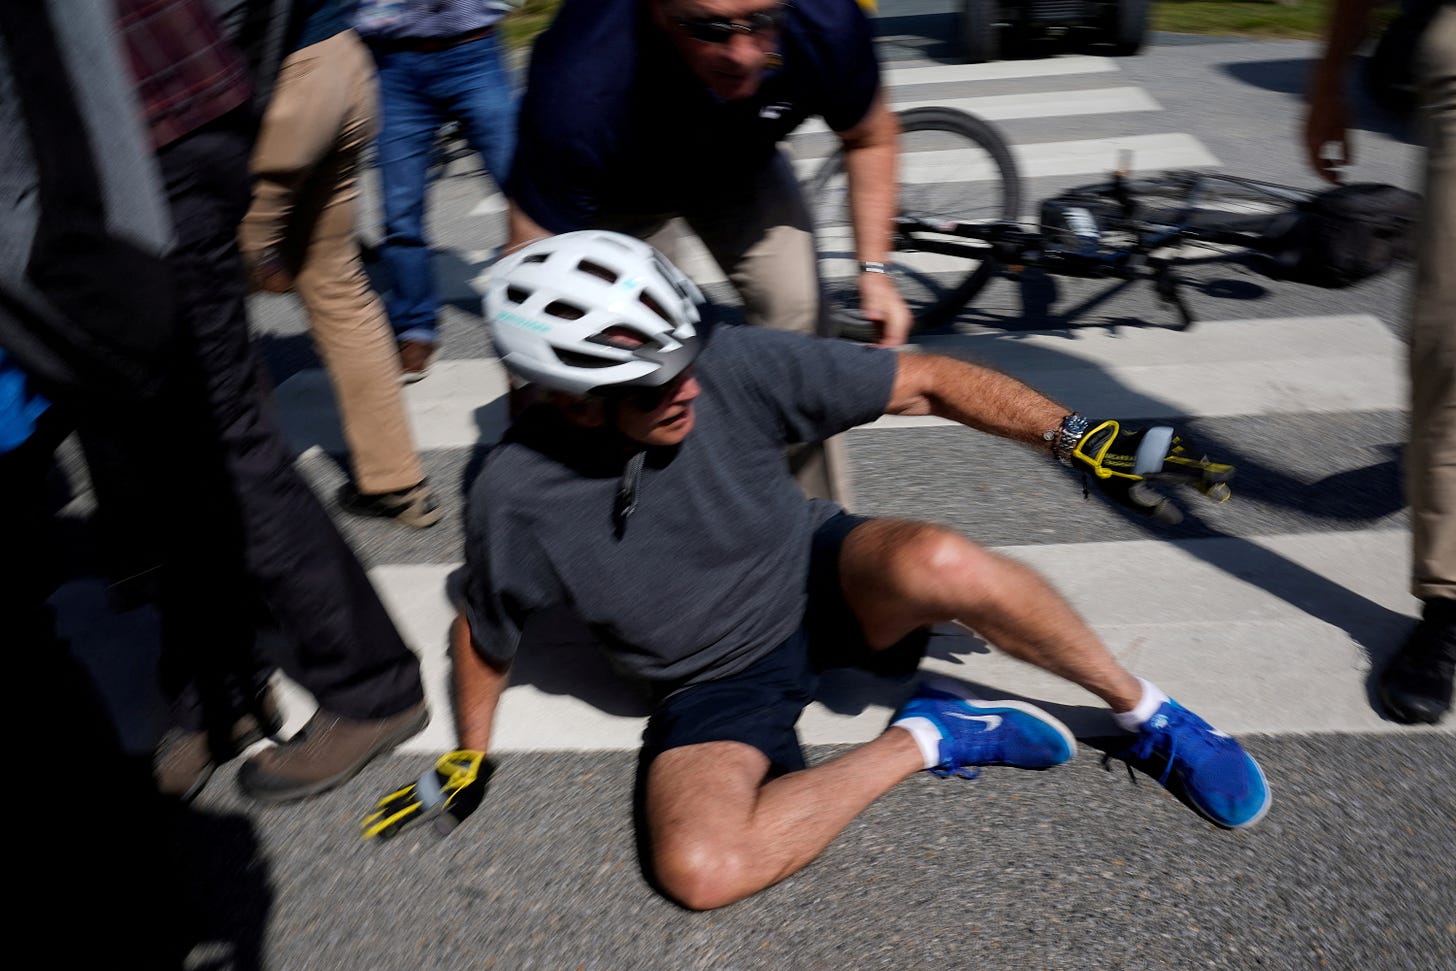 Biden falls after flubbing bike dismount, but uninjured ...